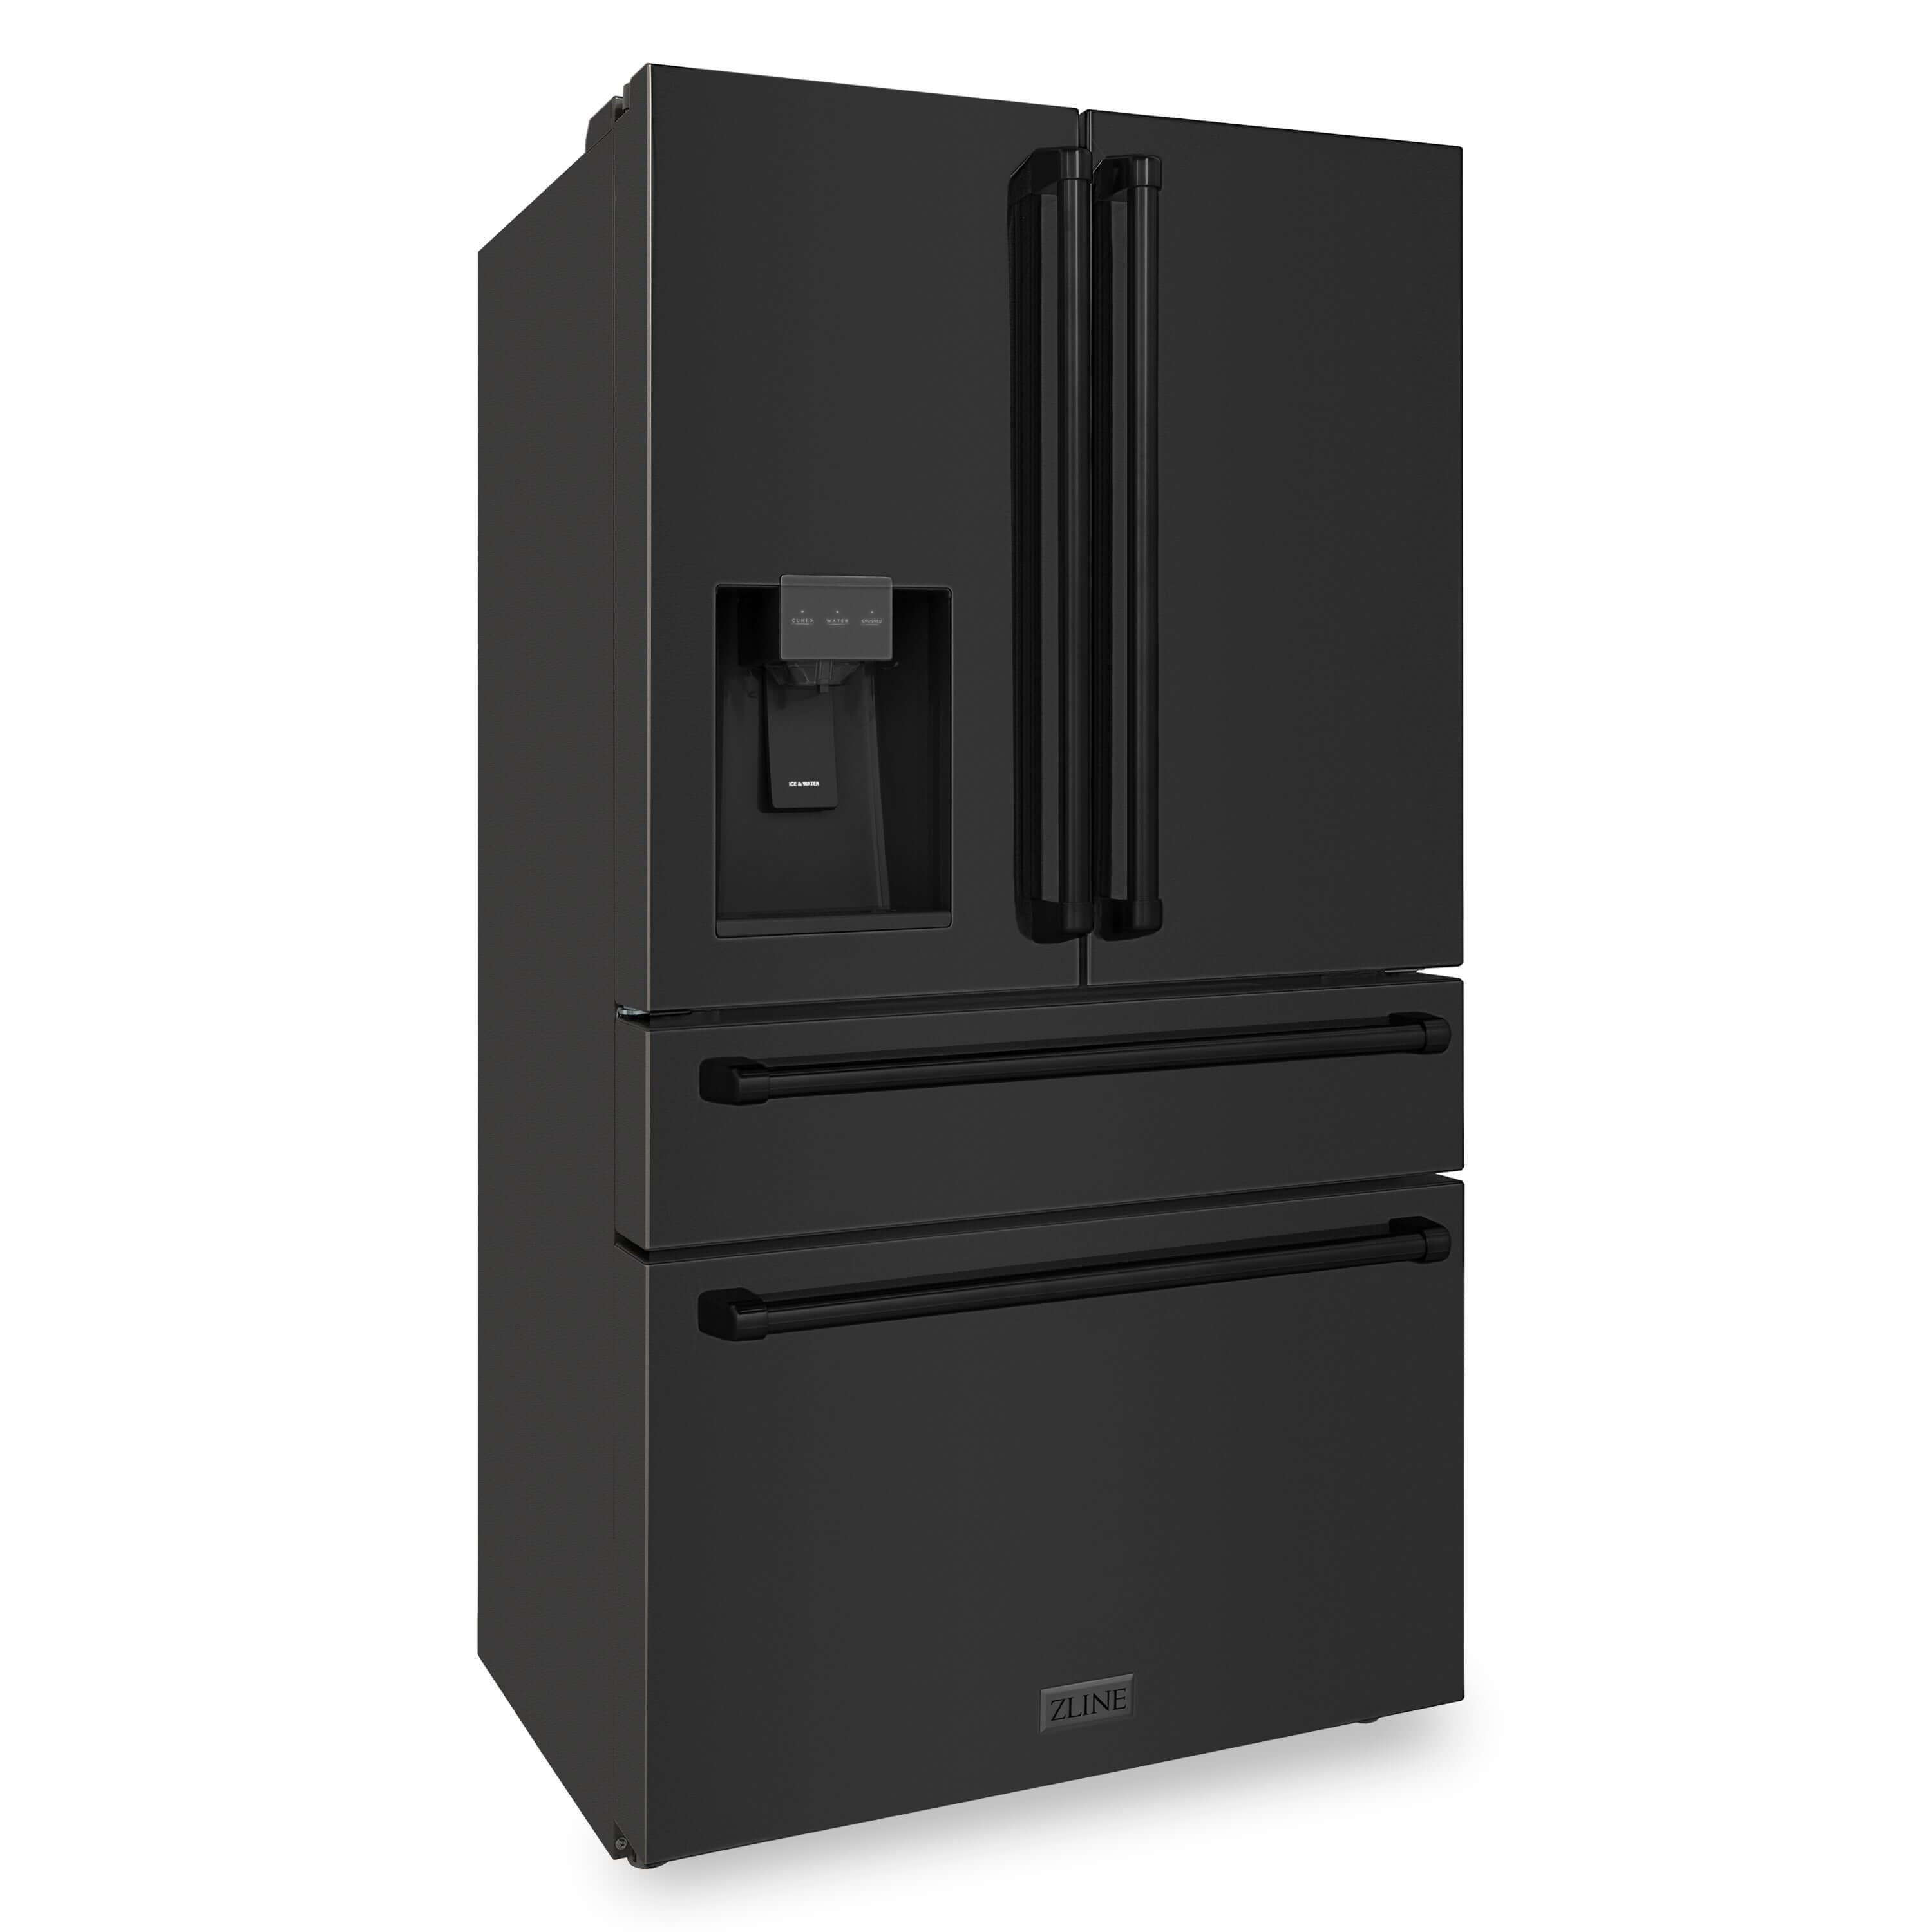 ZLINE Black Stainless Steel French Door Refrigerator (RFM-W-WF-36-BS) Side View